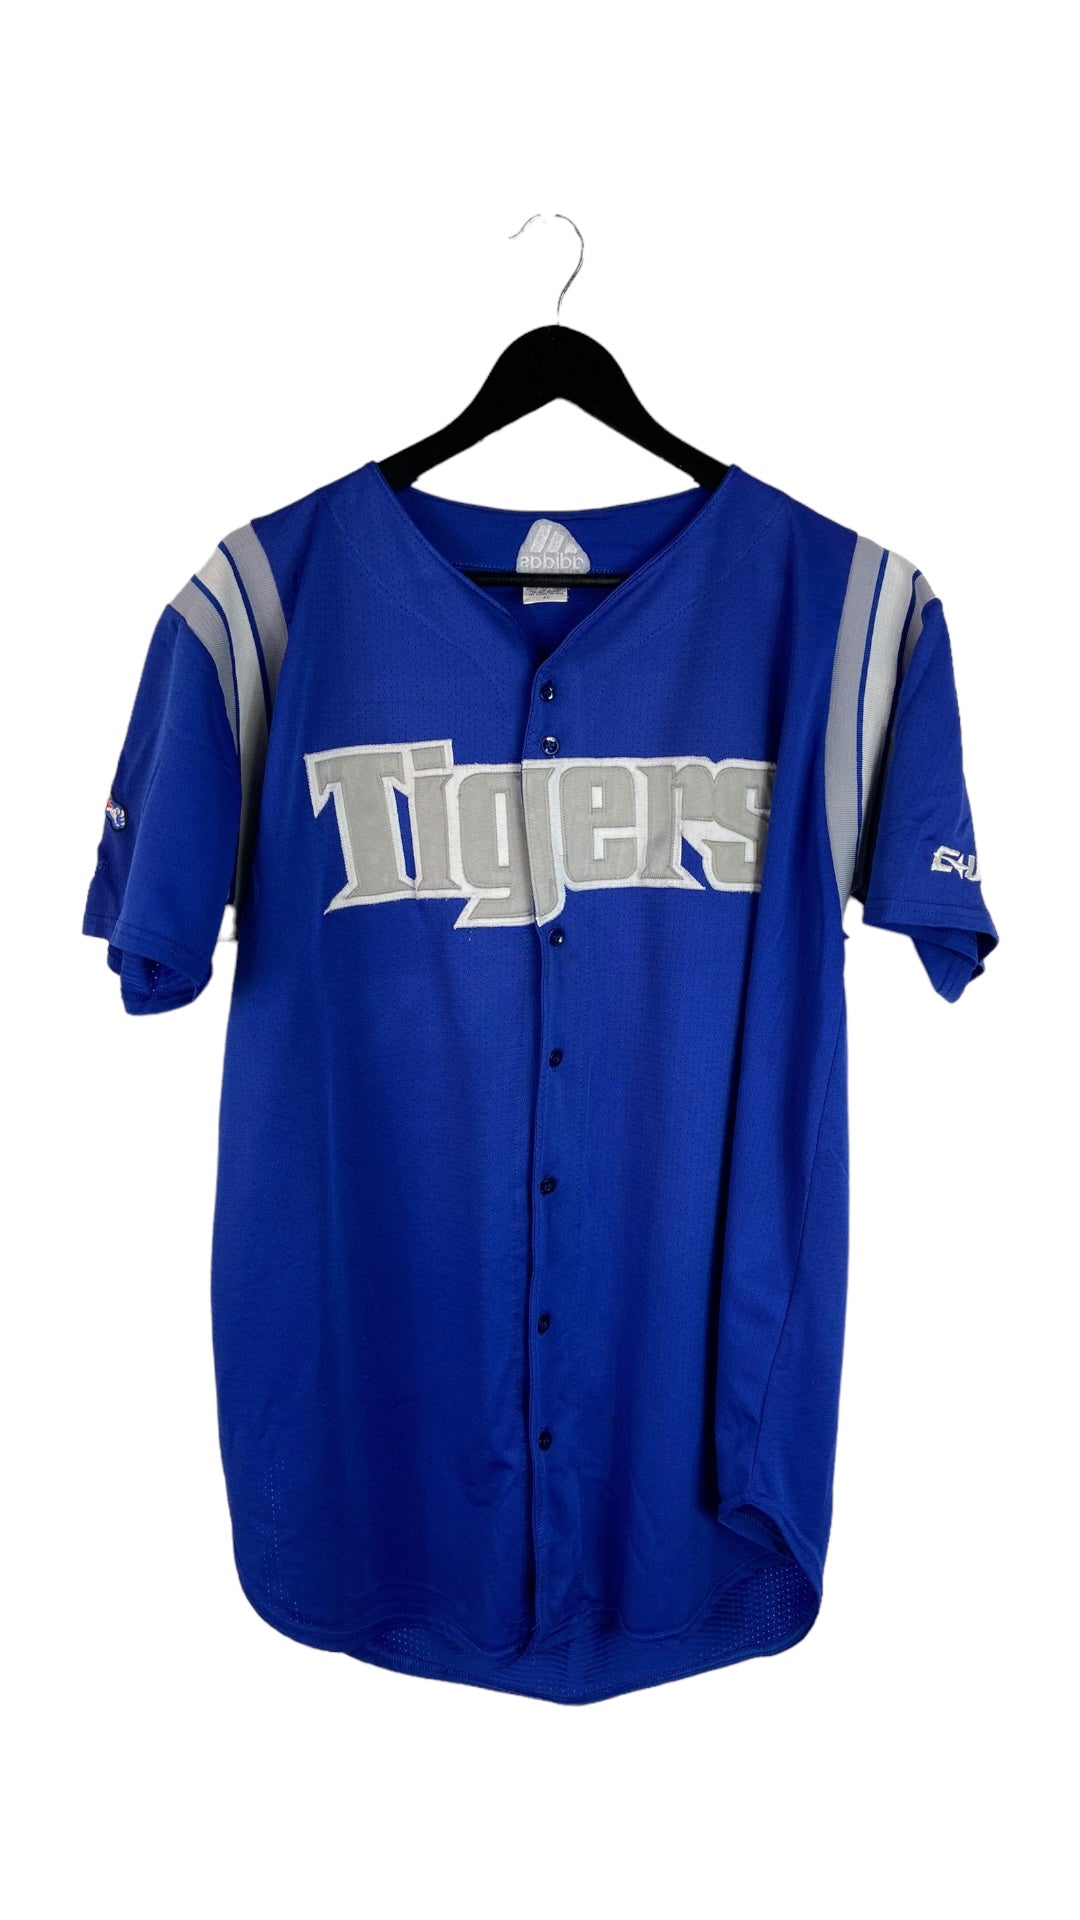 VTG Memphis Tigers Adidas Blue Baseball #42 Jersey Sz XL